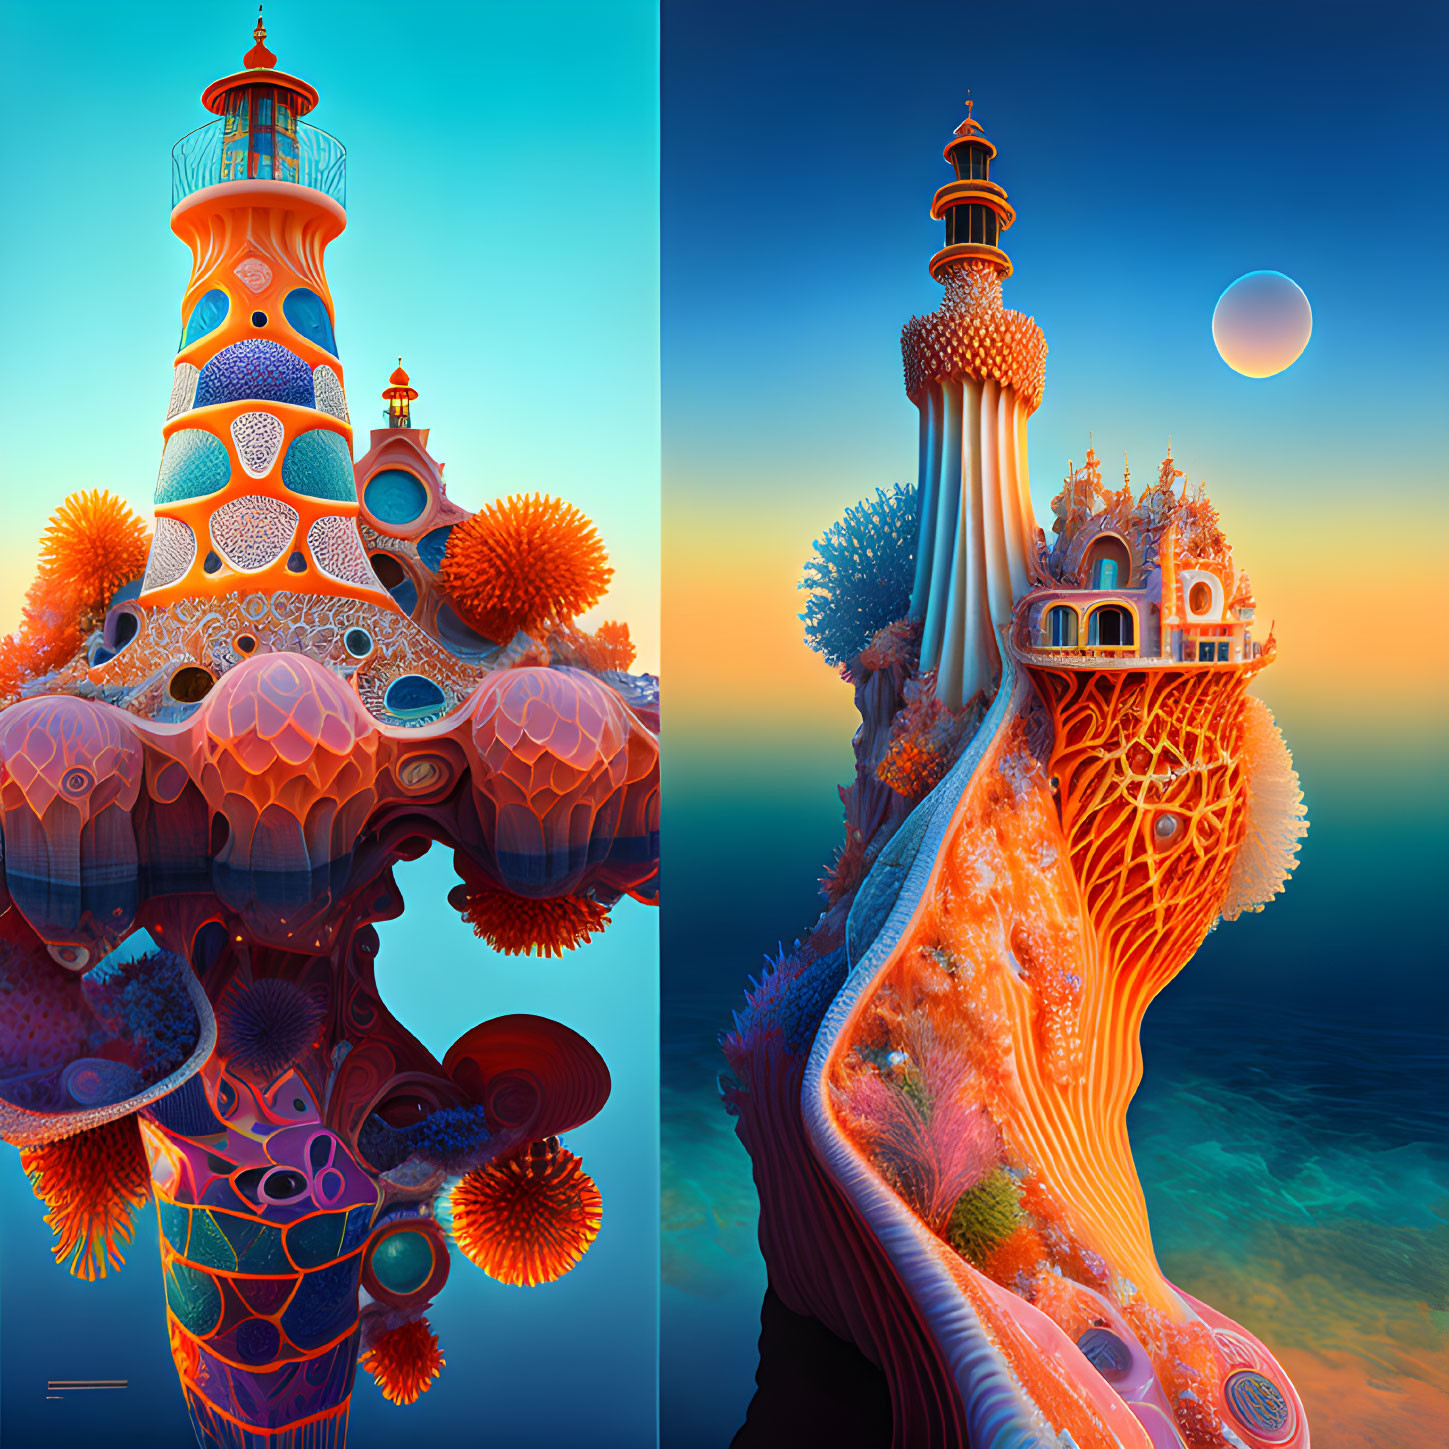 Fantastical coral-like towers in vibrant digital artwork